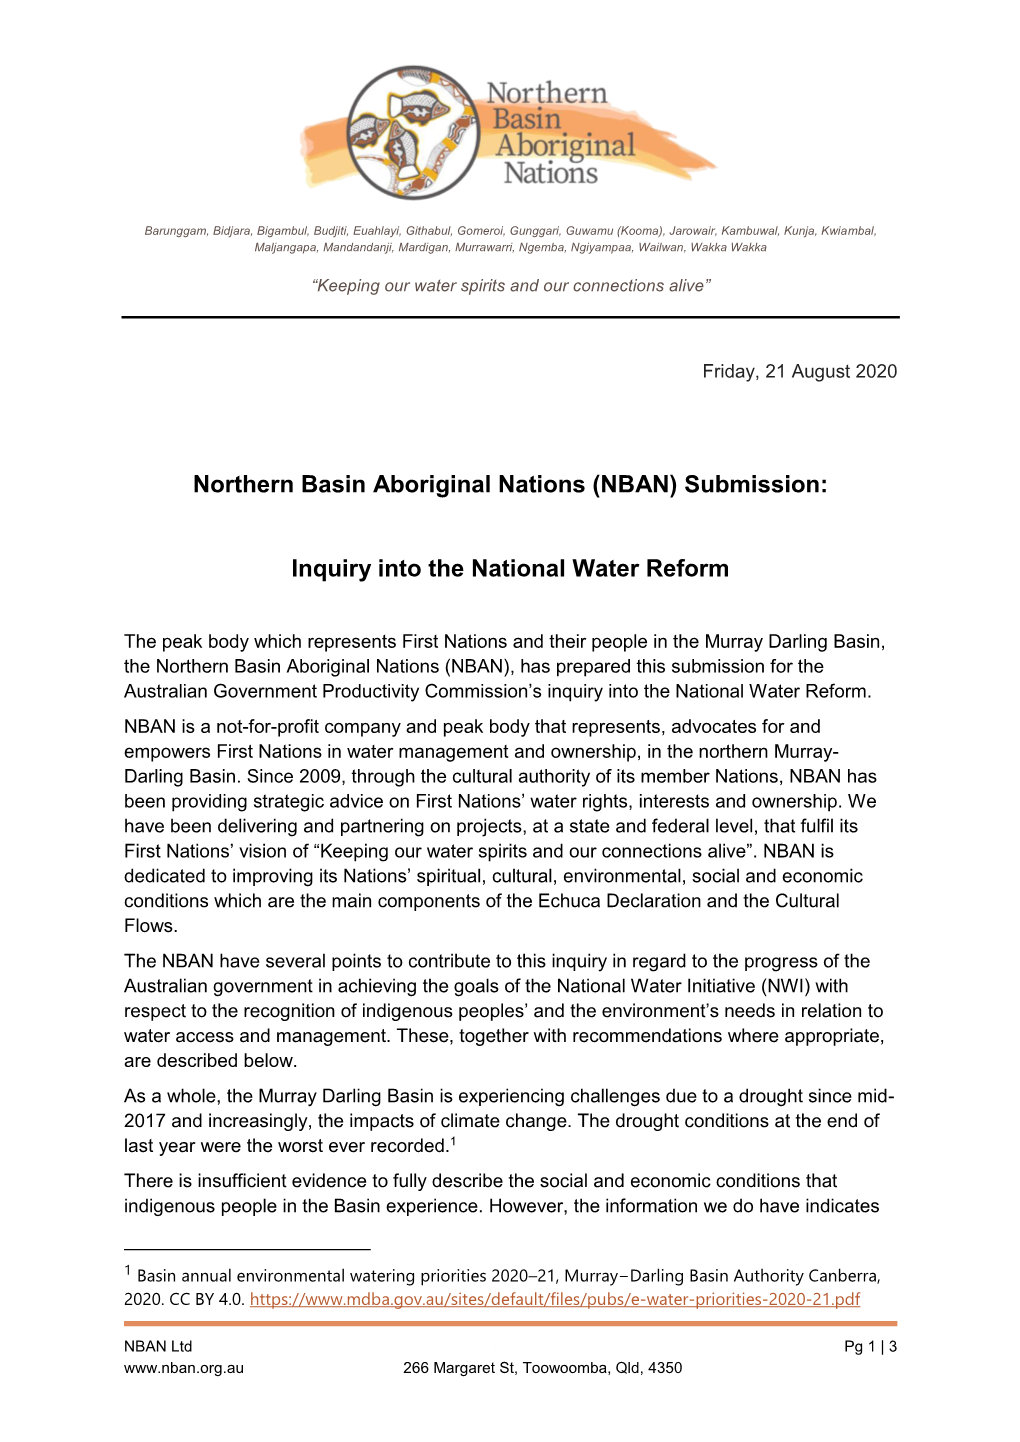 Northern Basin Aboriginal Nations (NBAN) Submission